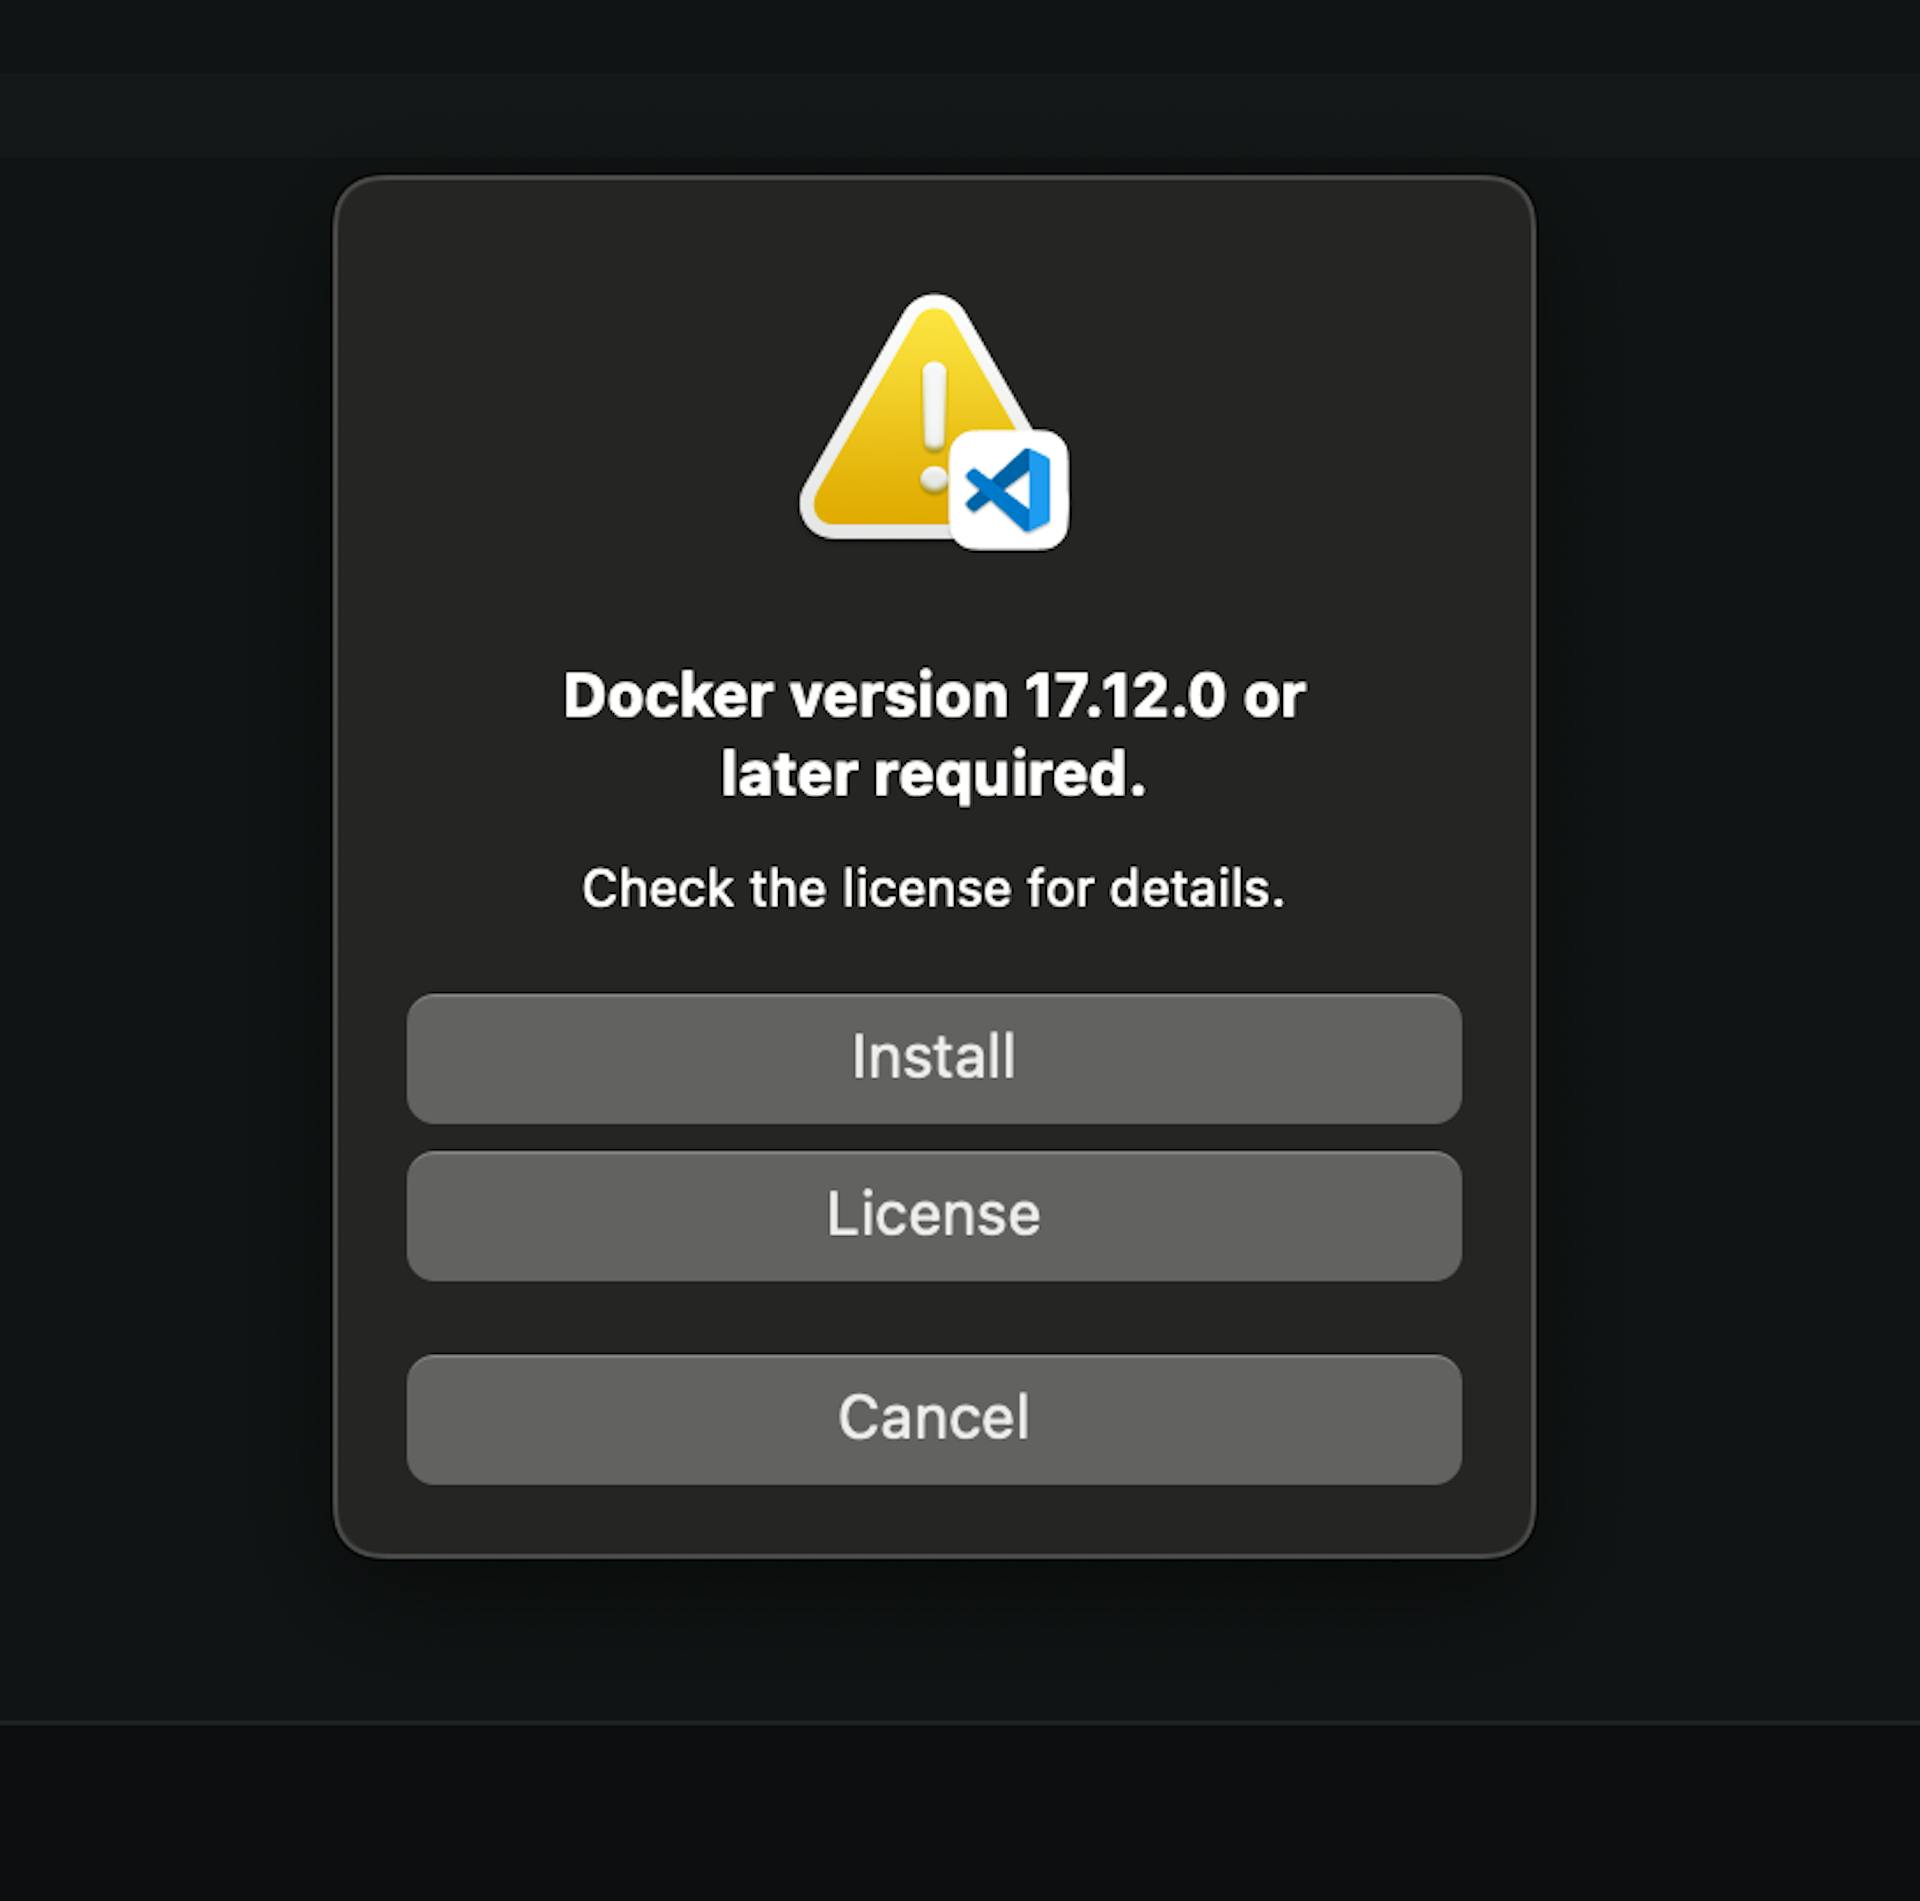 Vscode error about Docker version 17.12.0 not being installed